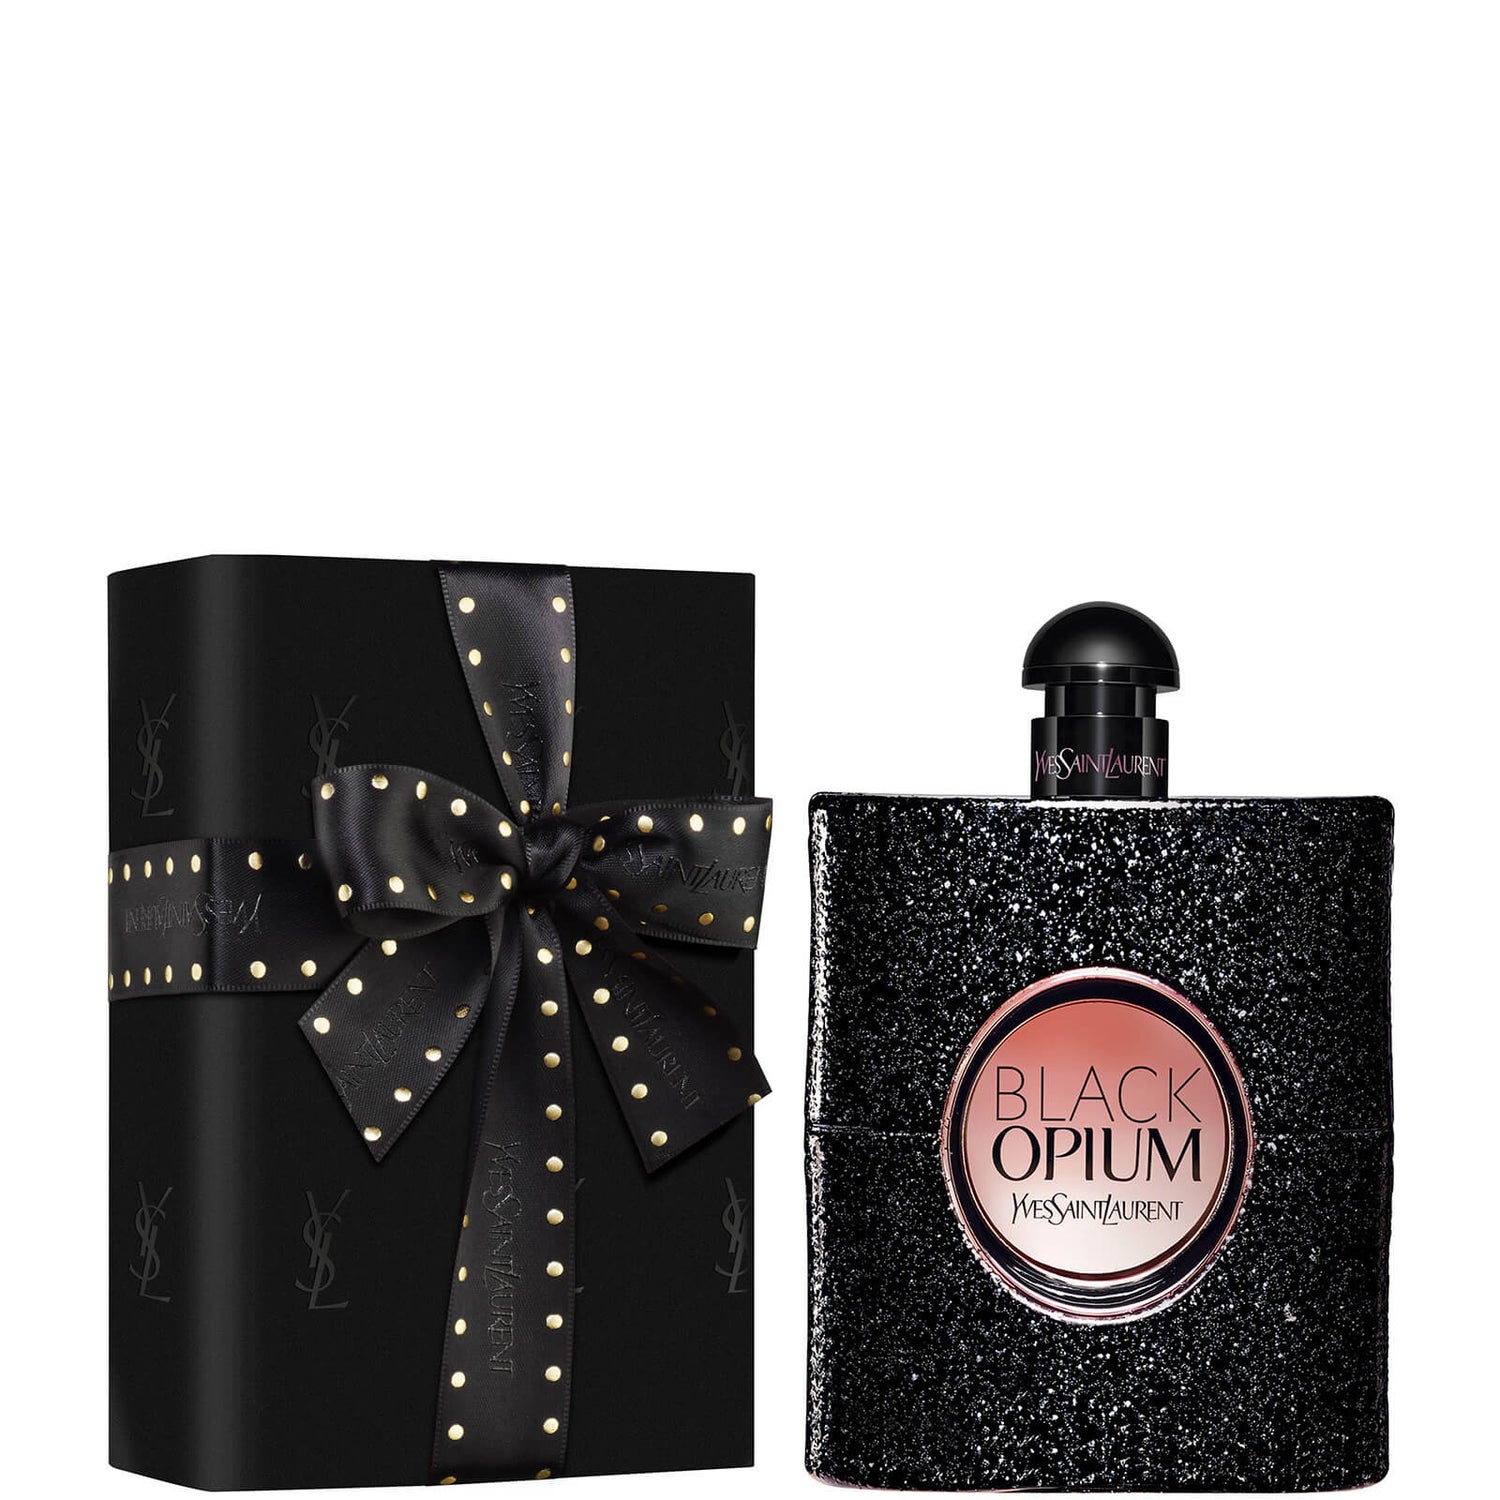 Yves Saint Laurent Eau de Parfum Opio Negro preenvasado - 150ml